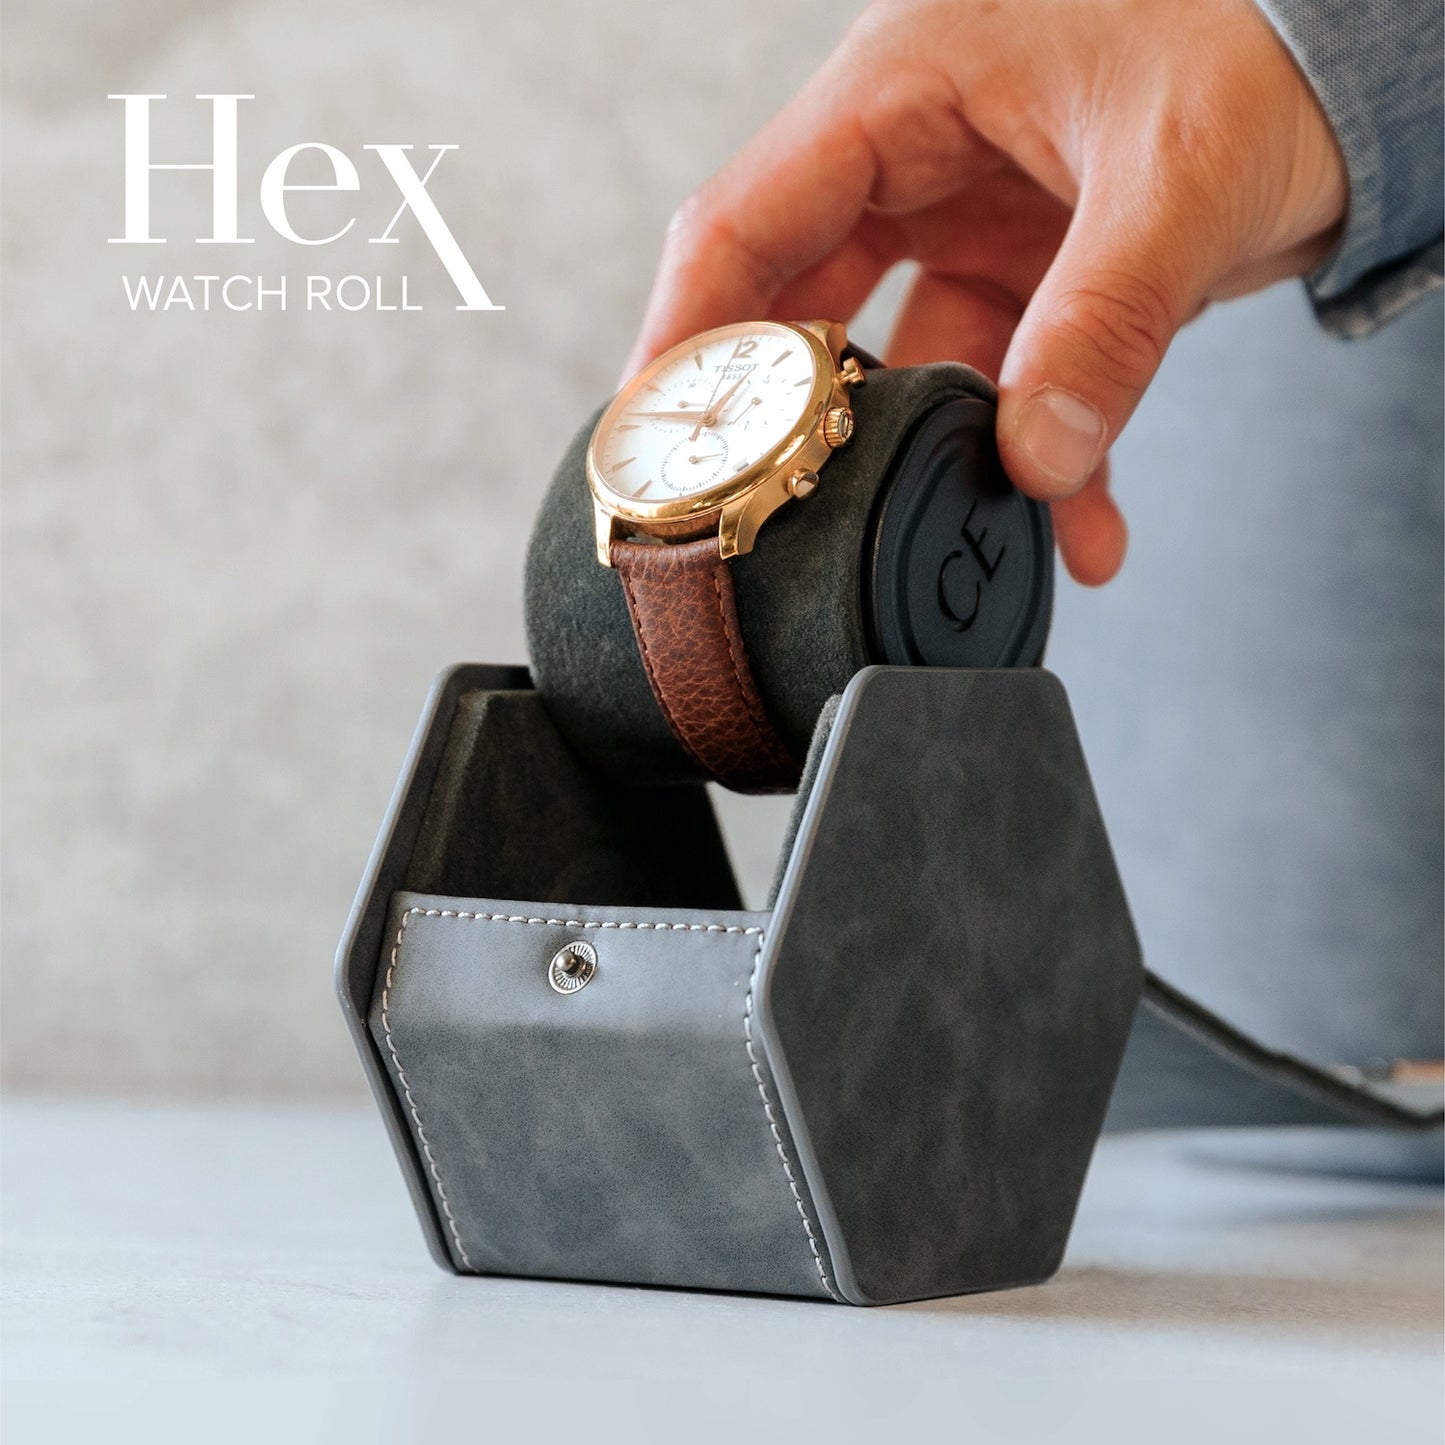 HEX Travel Watch Roll - 1 Slot